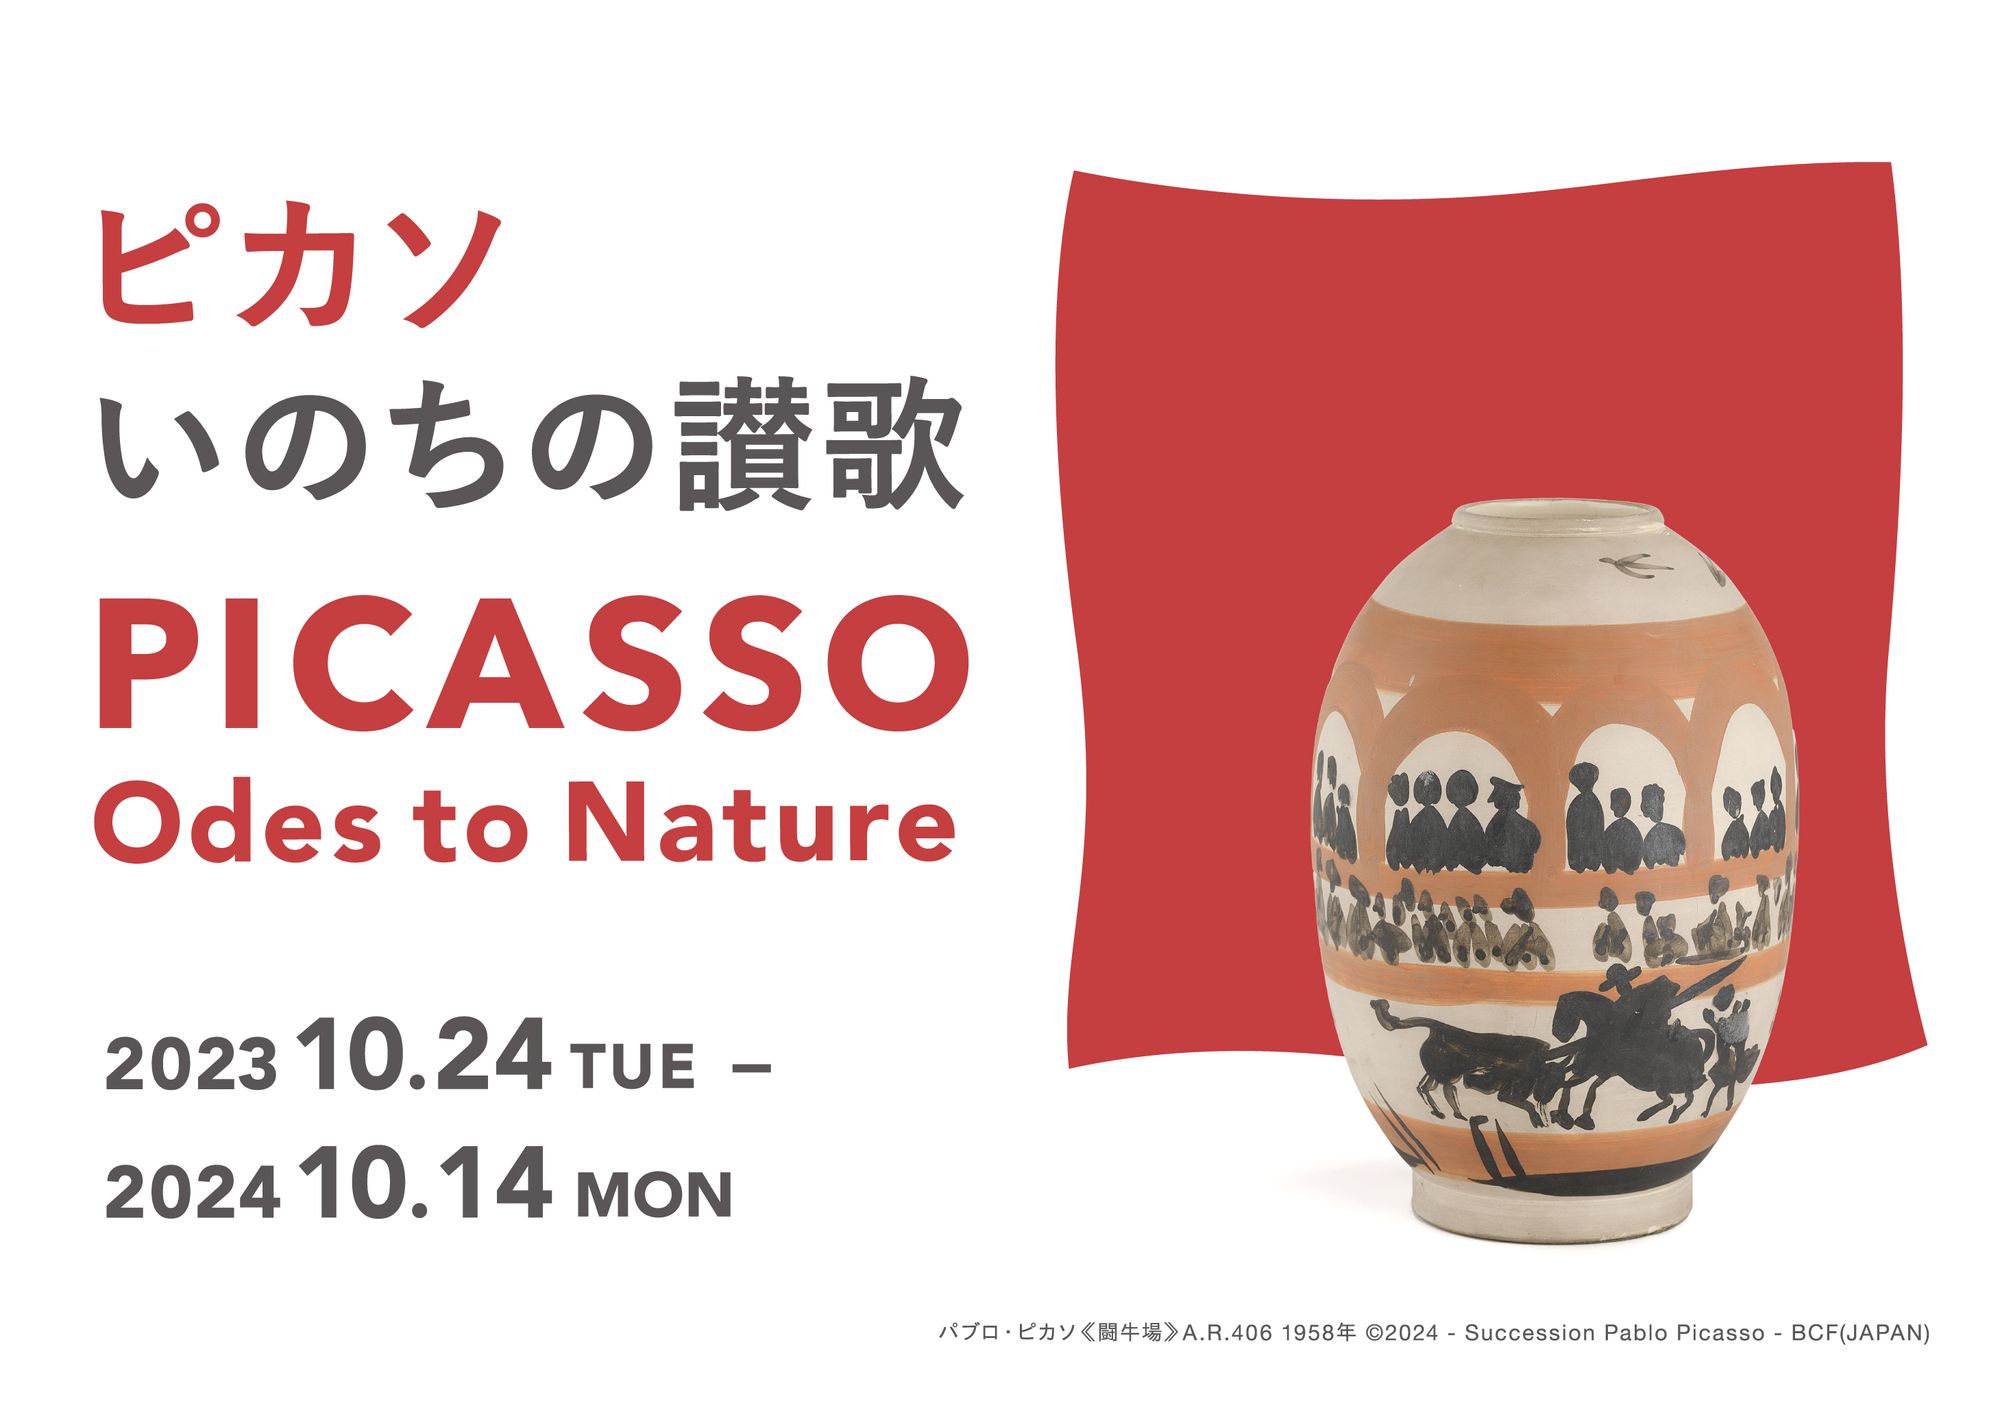 Tokyo Yoku Moku Museum Picasso Exhibition E-tickets